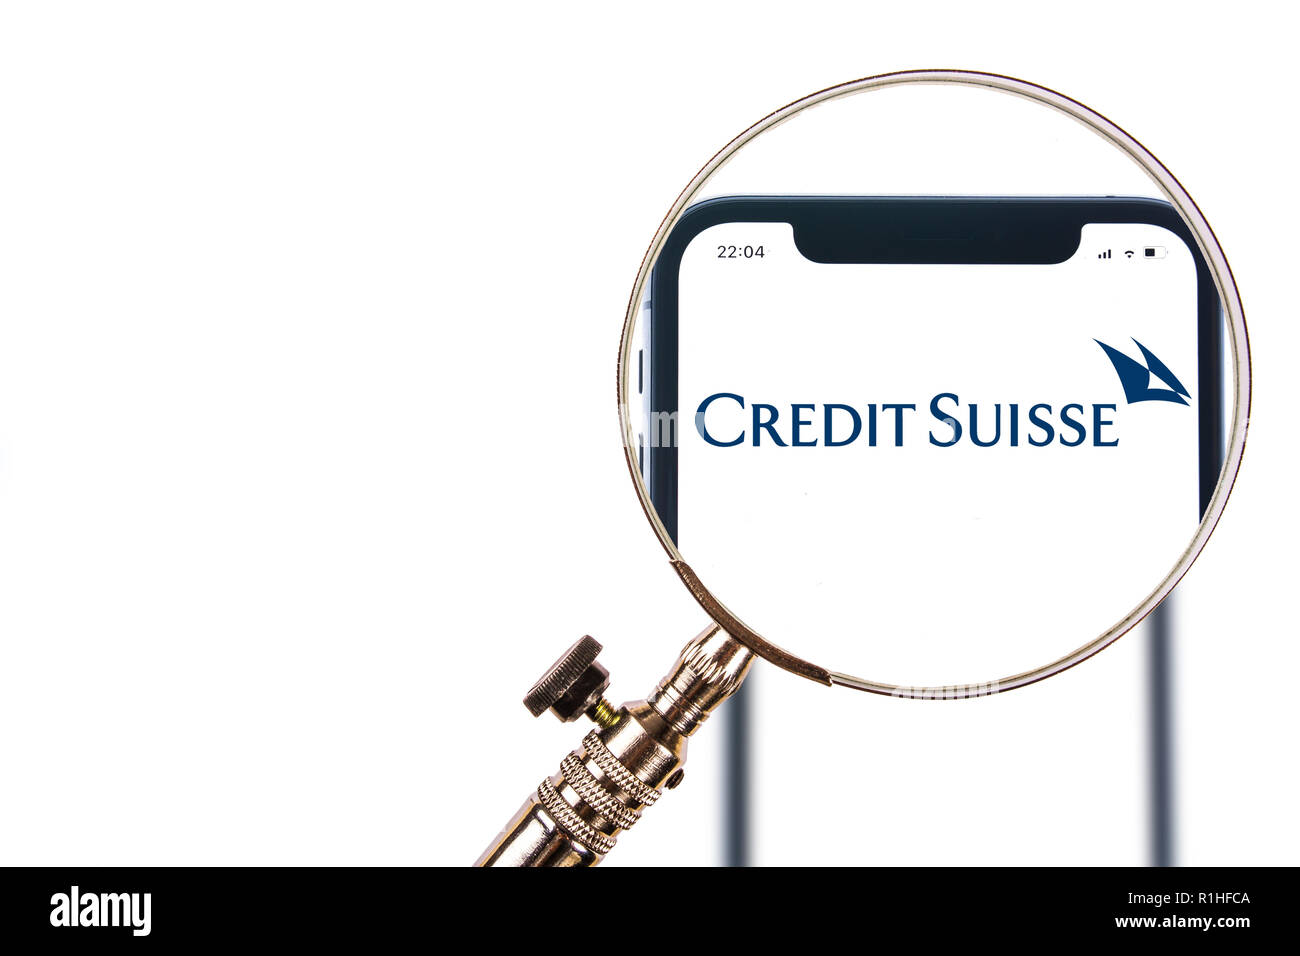 SOLOTHURN, SWITZERLAND - NOVEMBER 12, 2018: Credit Suisse logo displayed on a modern smartphone Stock Photo